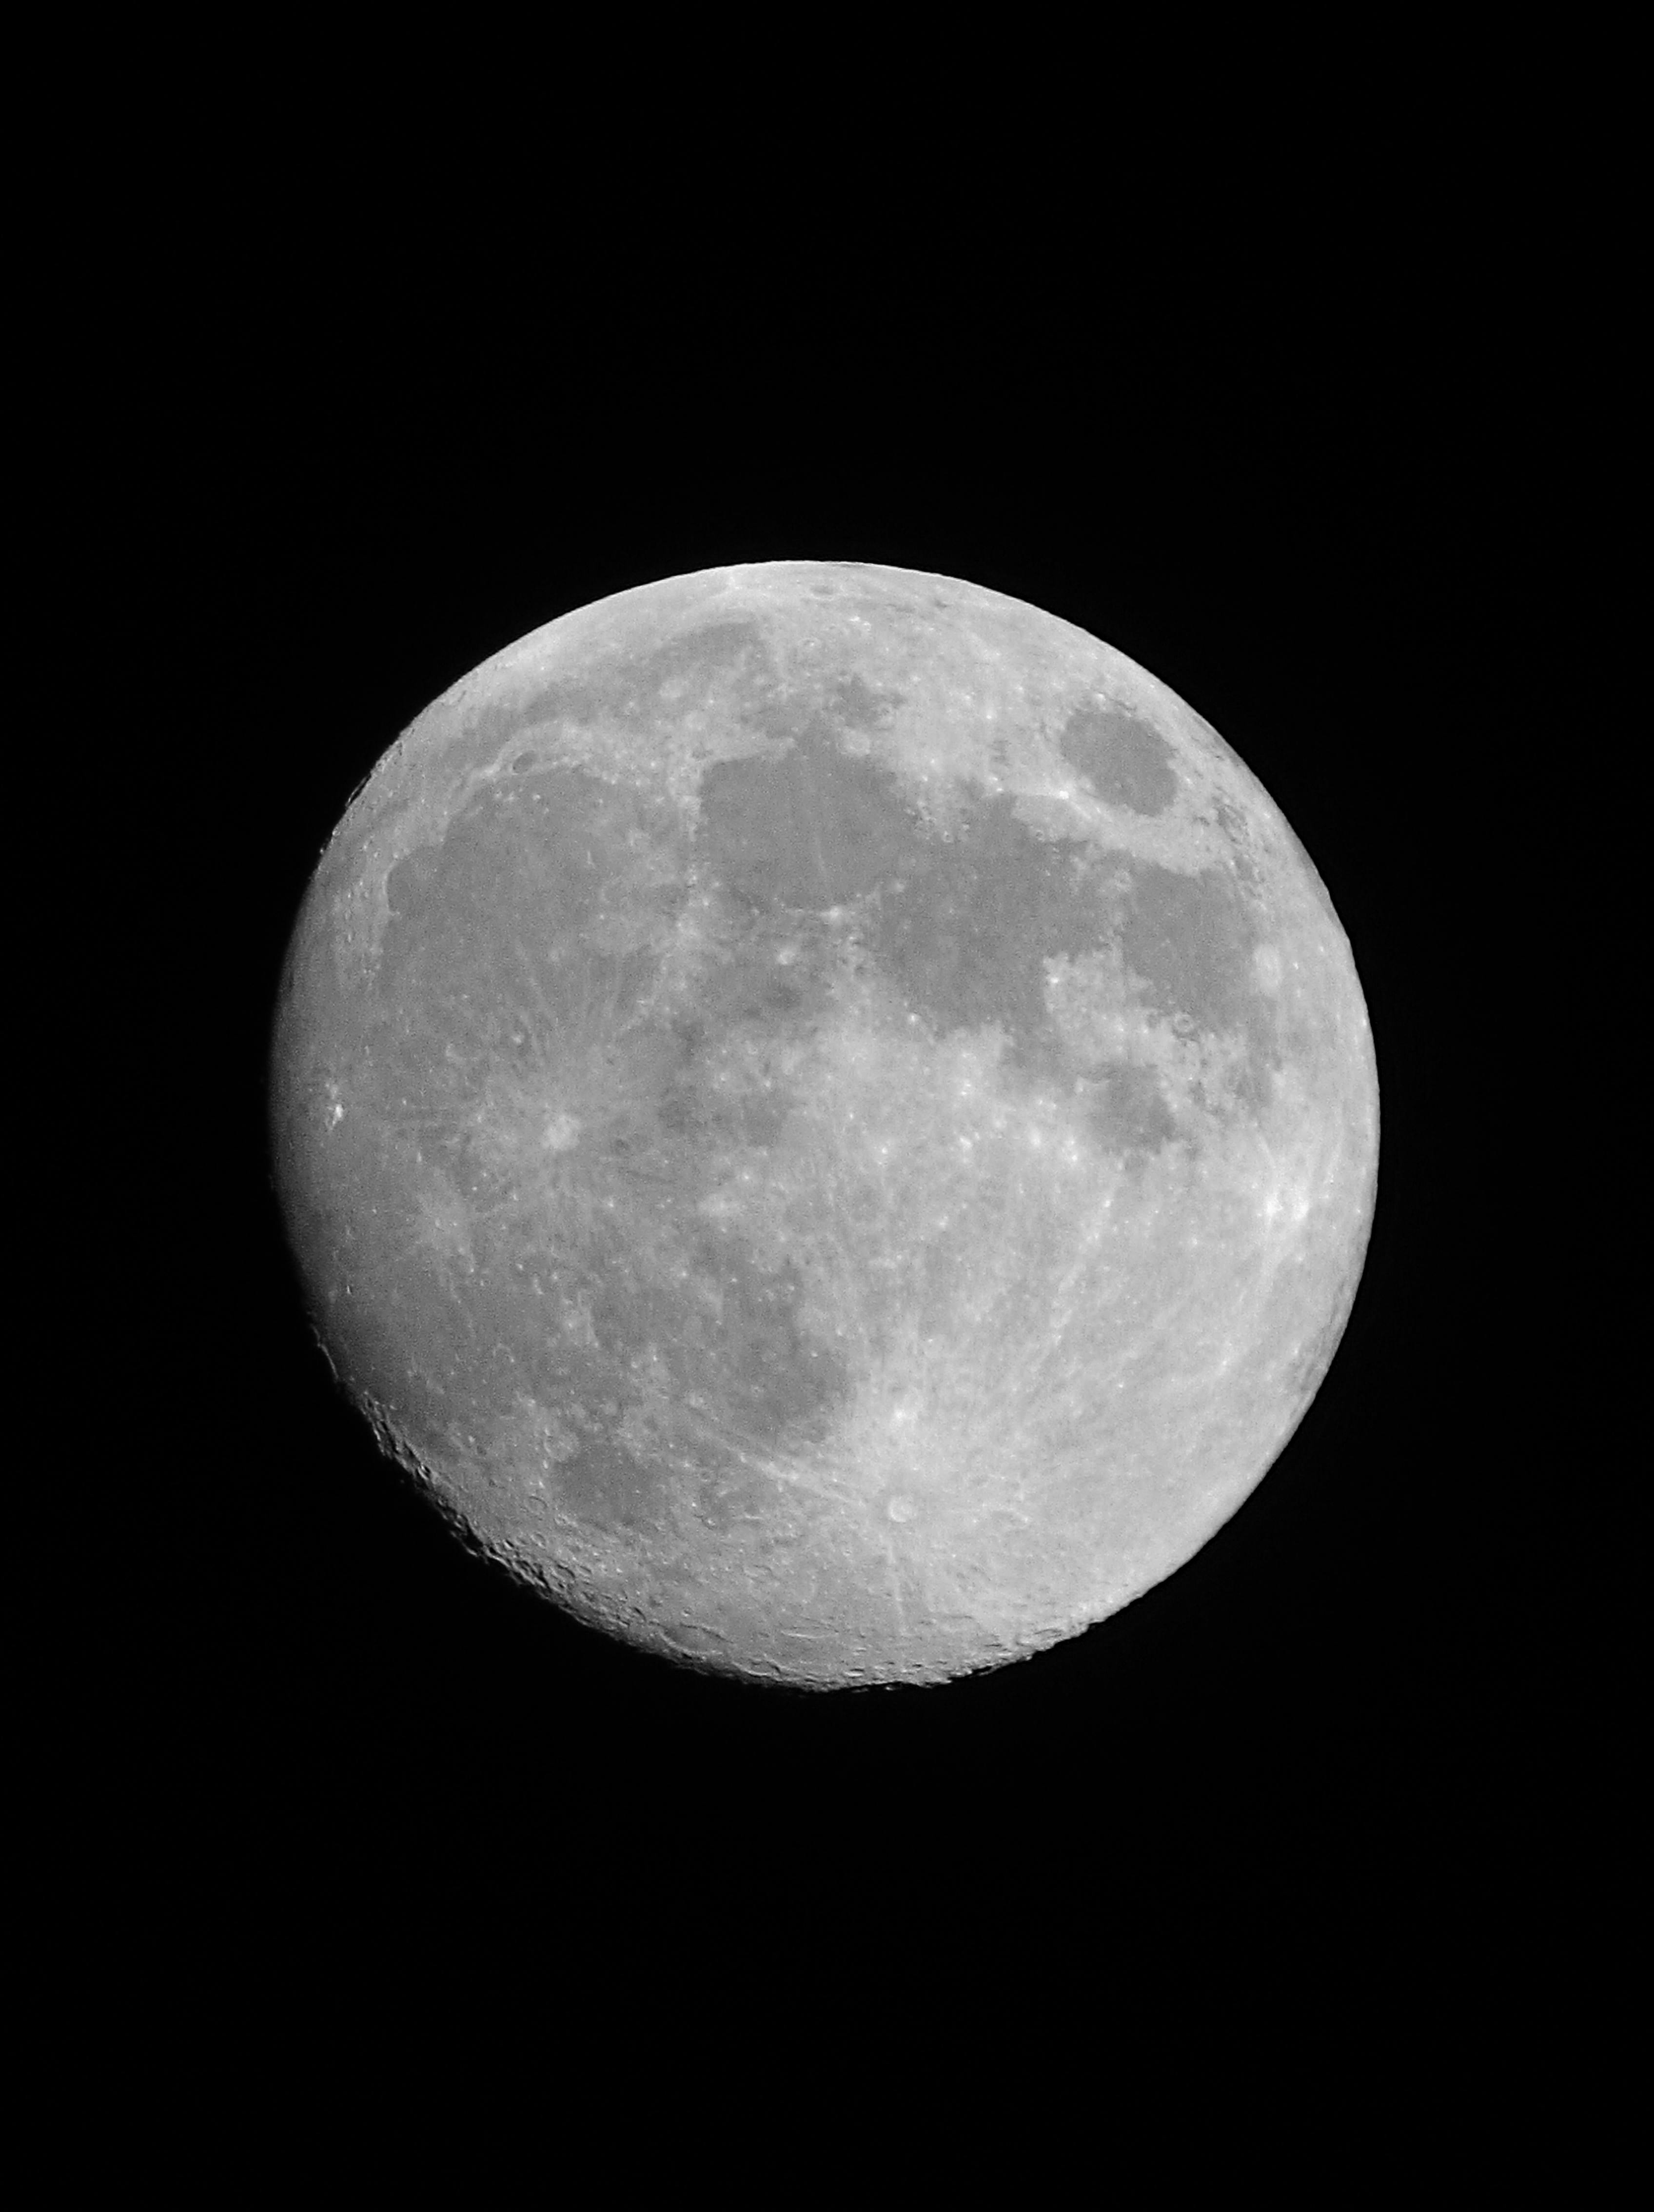 Details 200 moon in black background